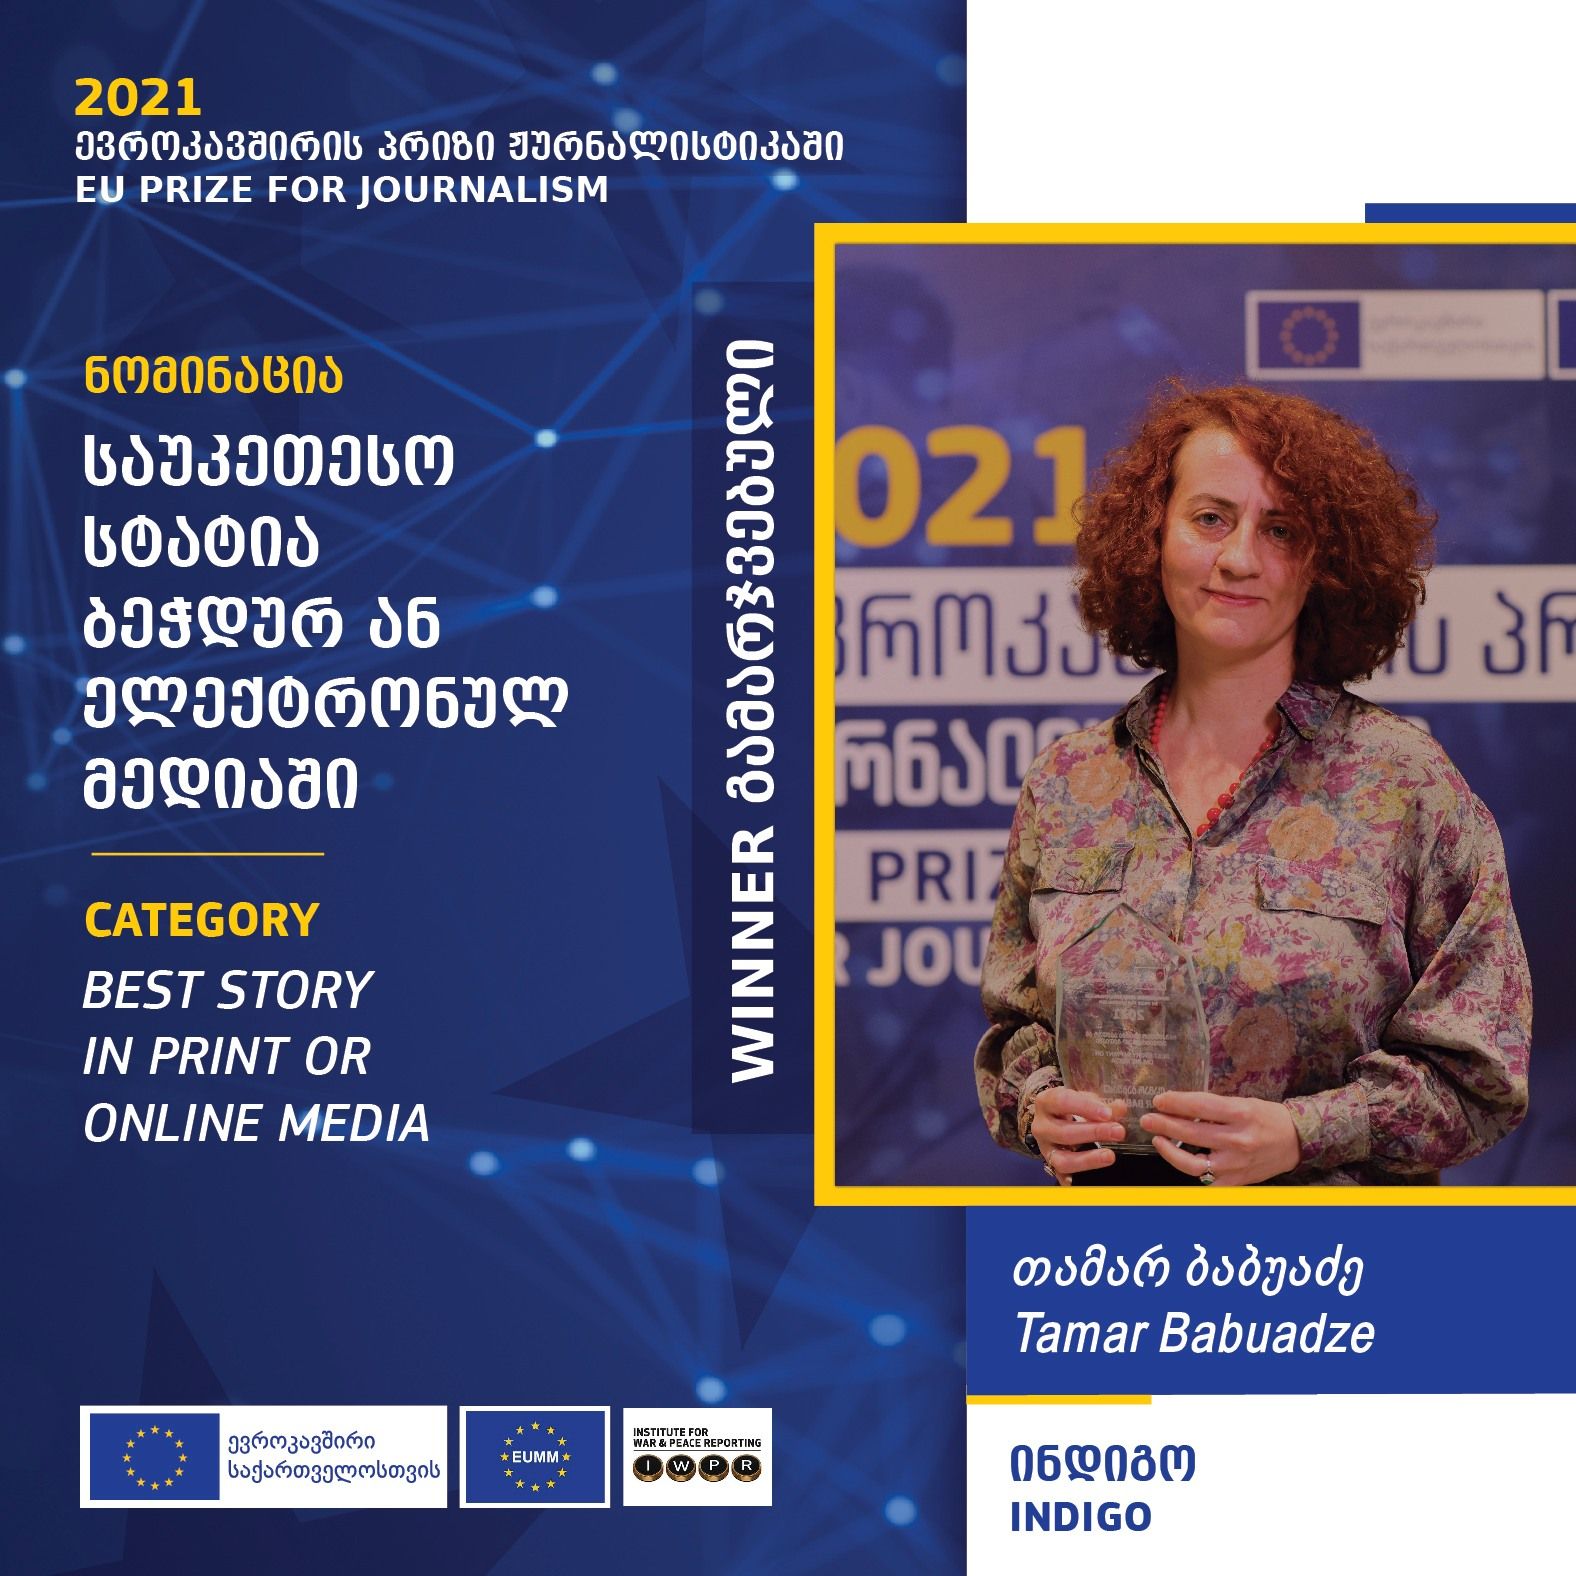 EU Prize for Journalism winner